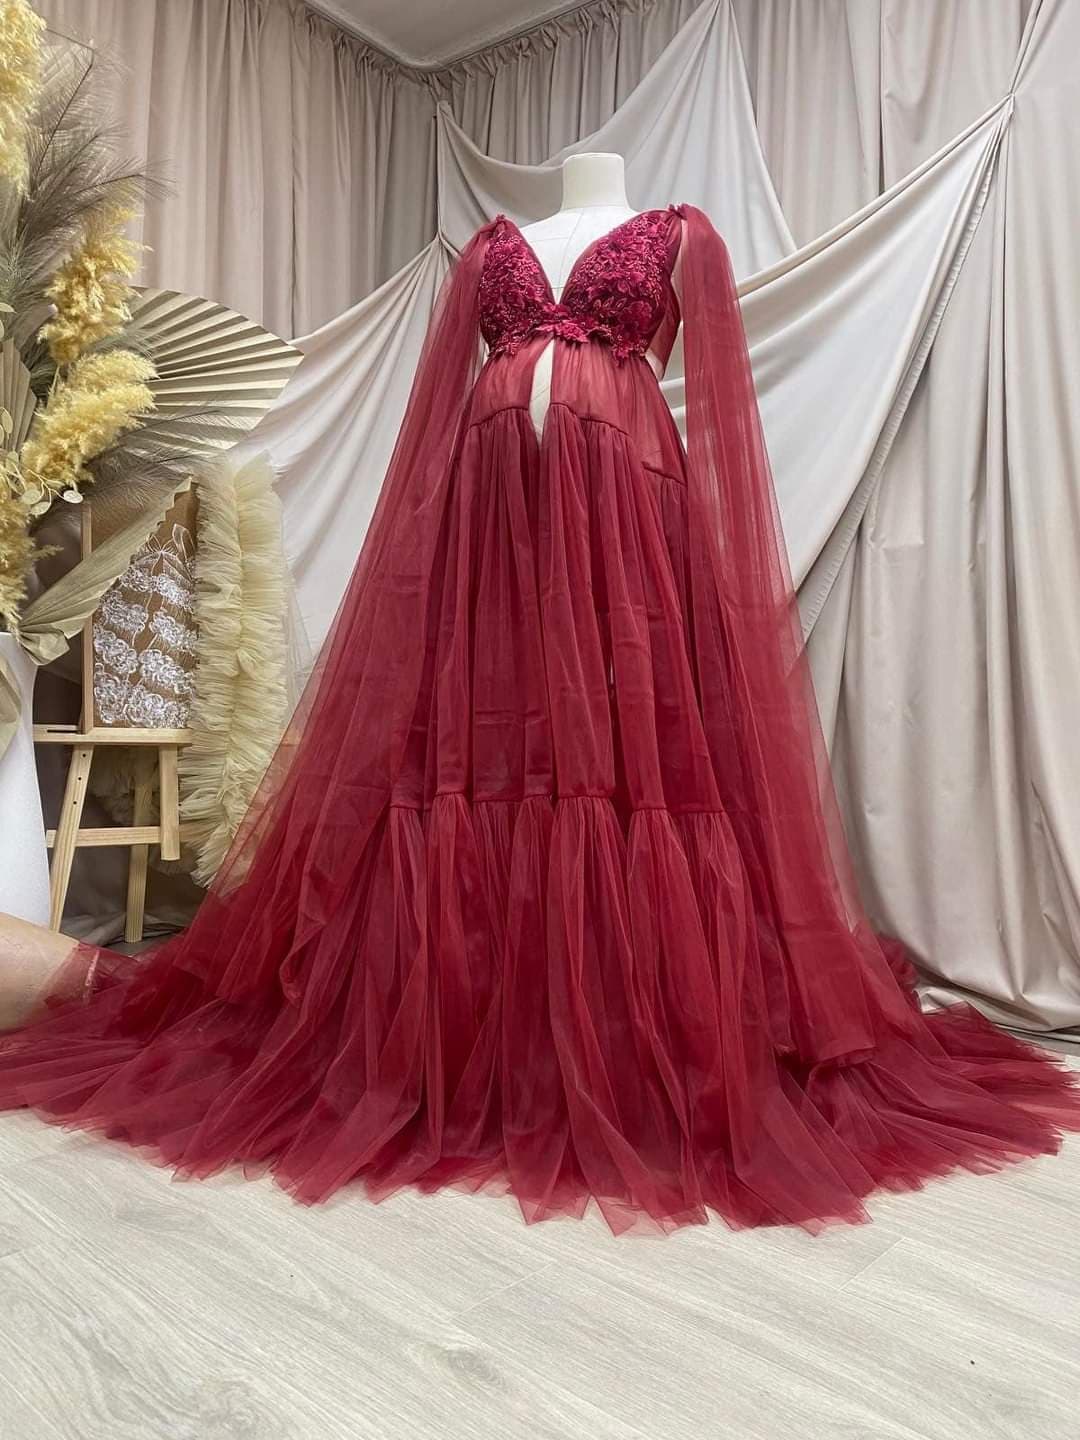 Burgundy Wisteria Gown - maternity photoshoot dress